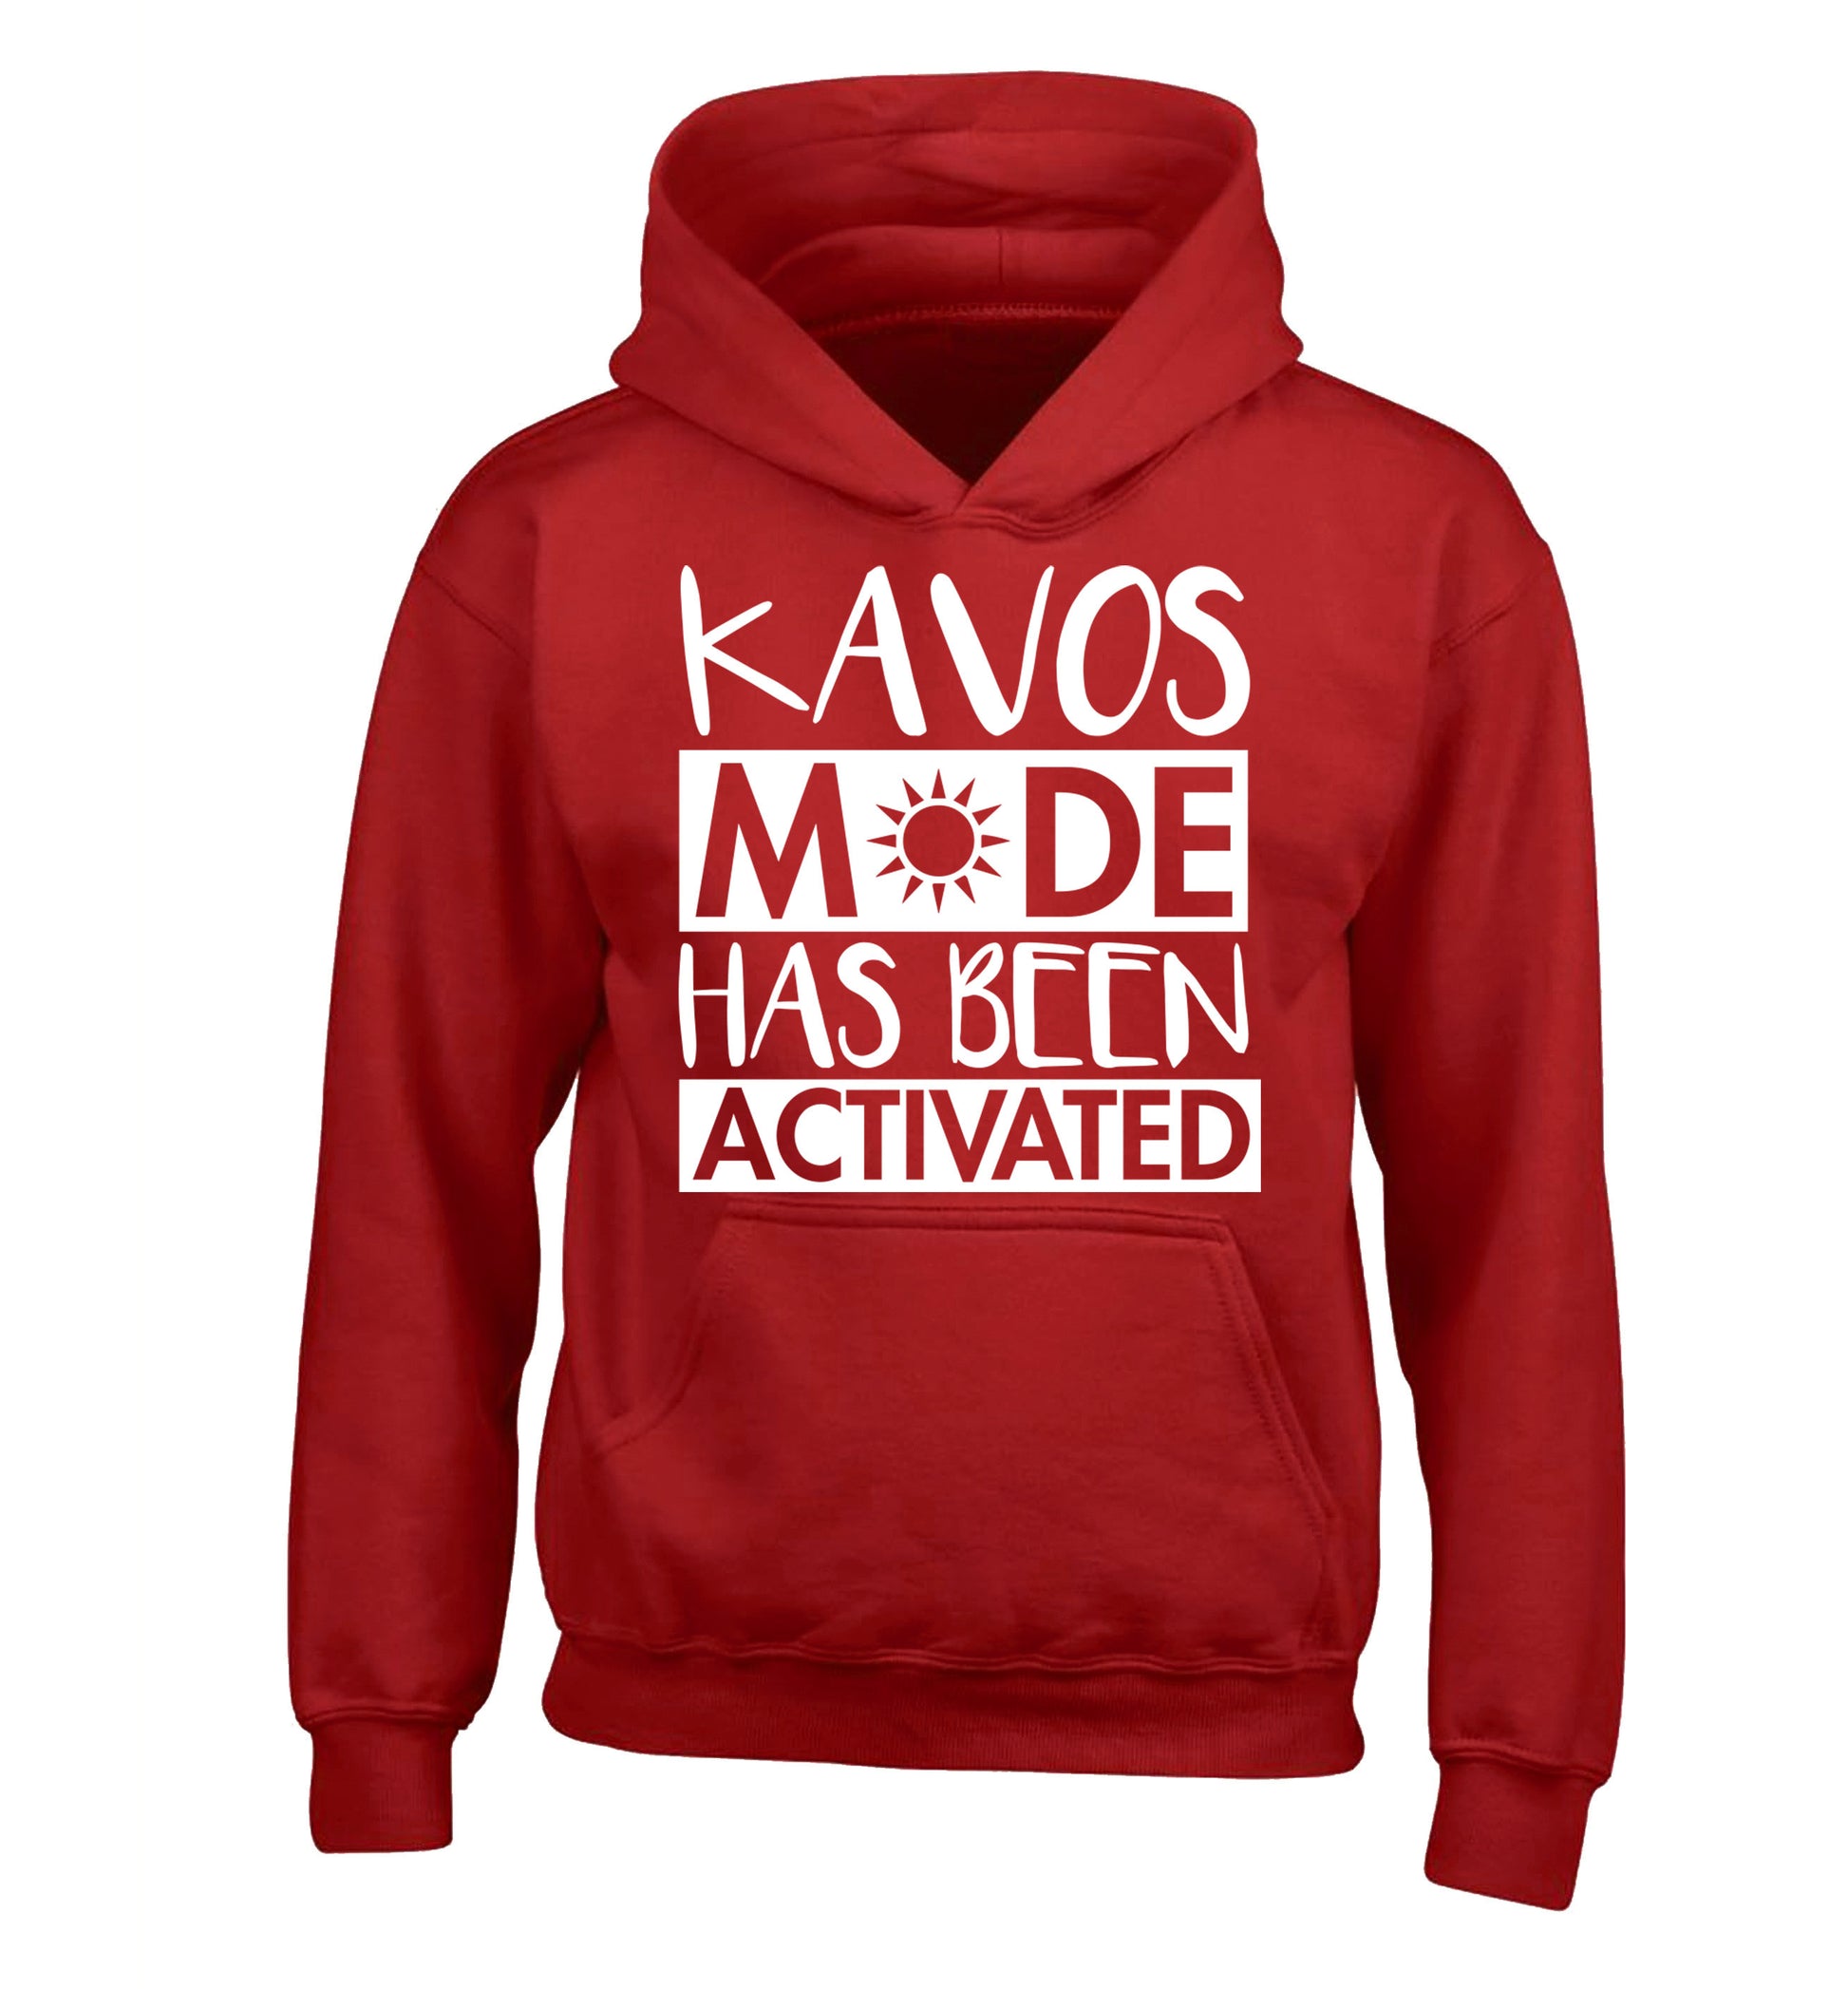 Kavos mode has been activated children's red hoodie 12-14 Years